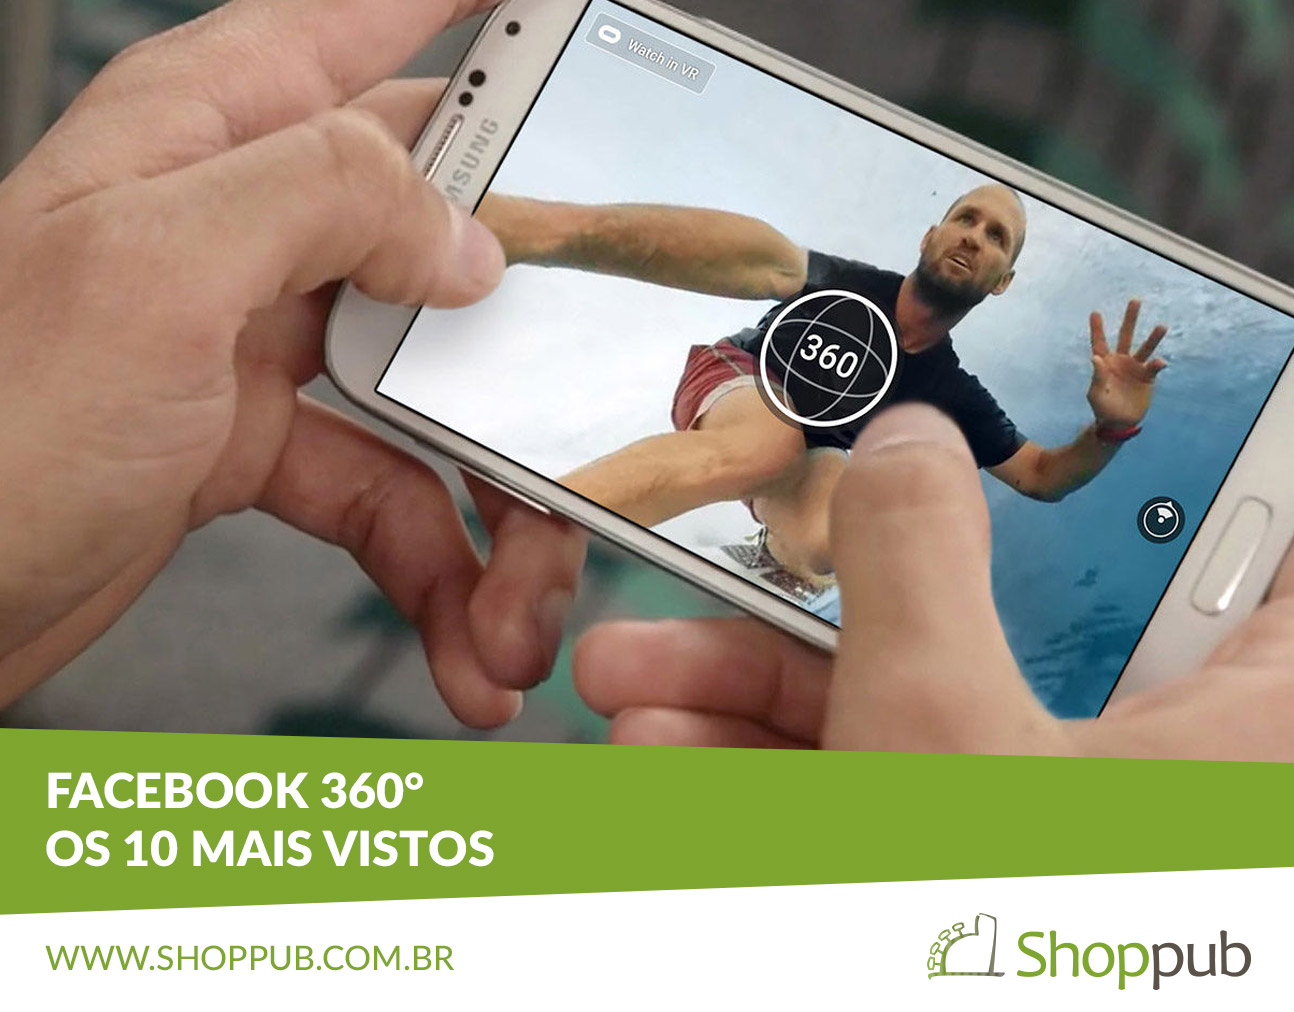 Facebook 360° - Os 10 mais vistos